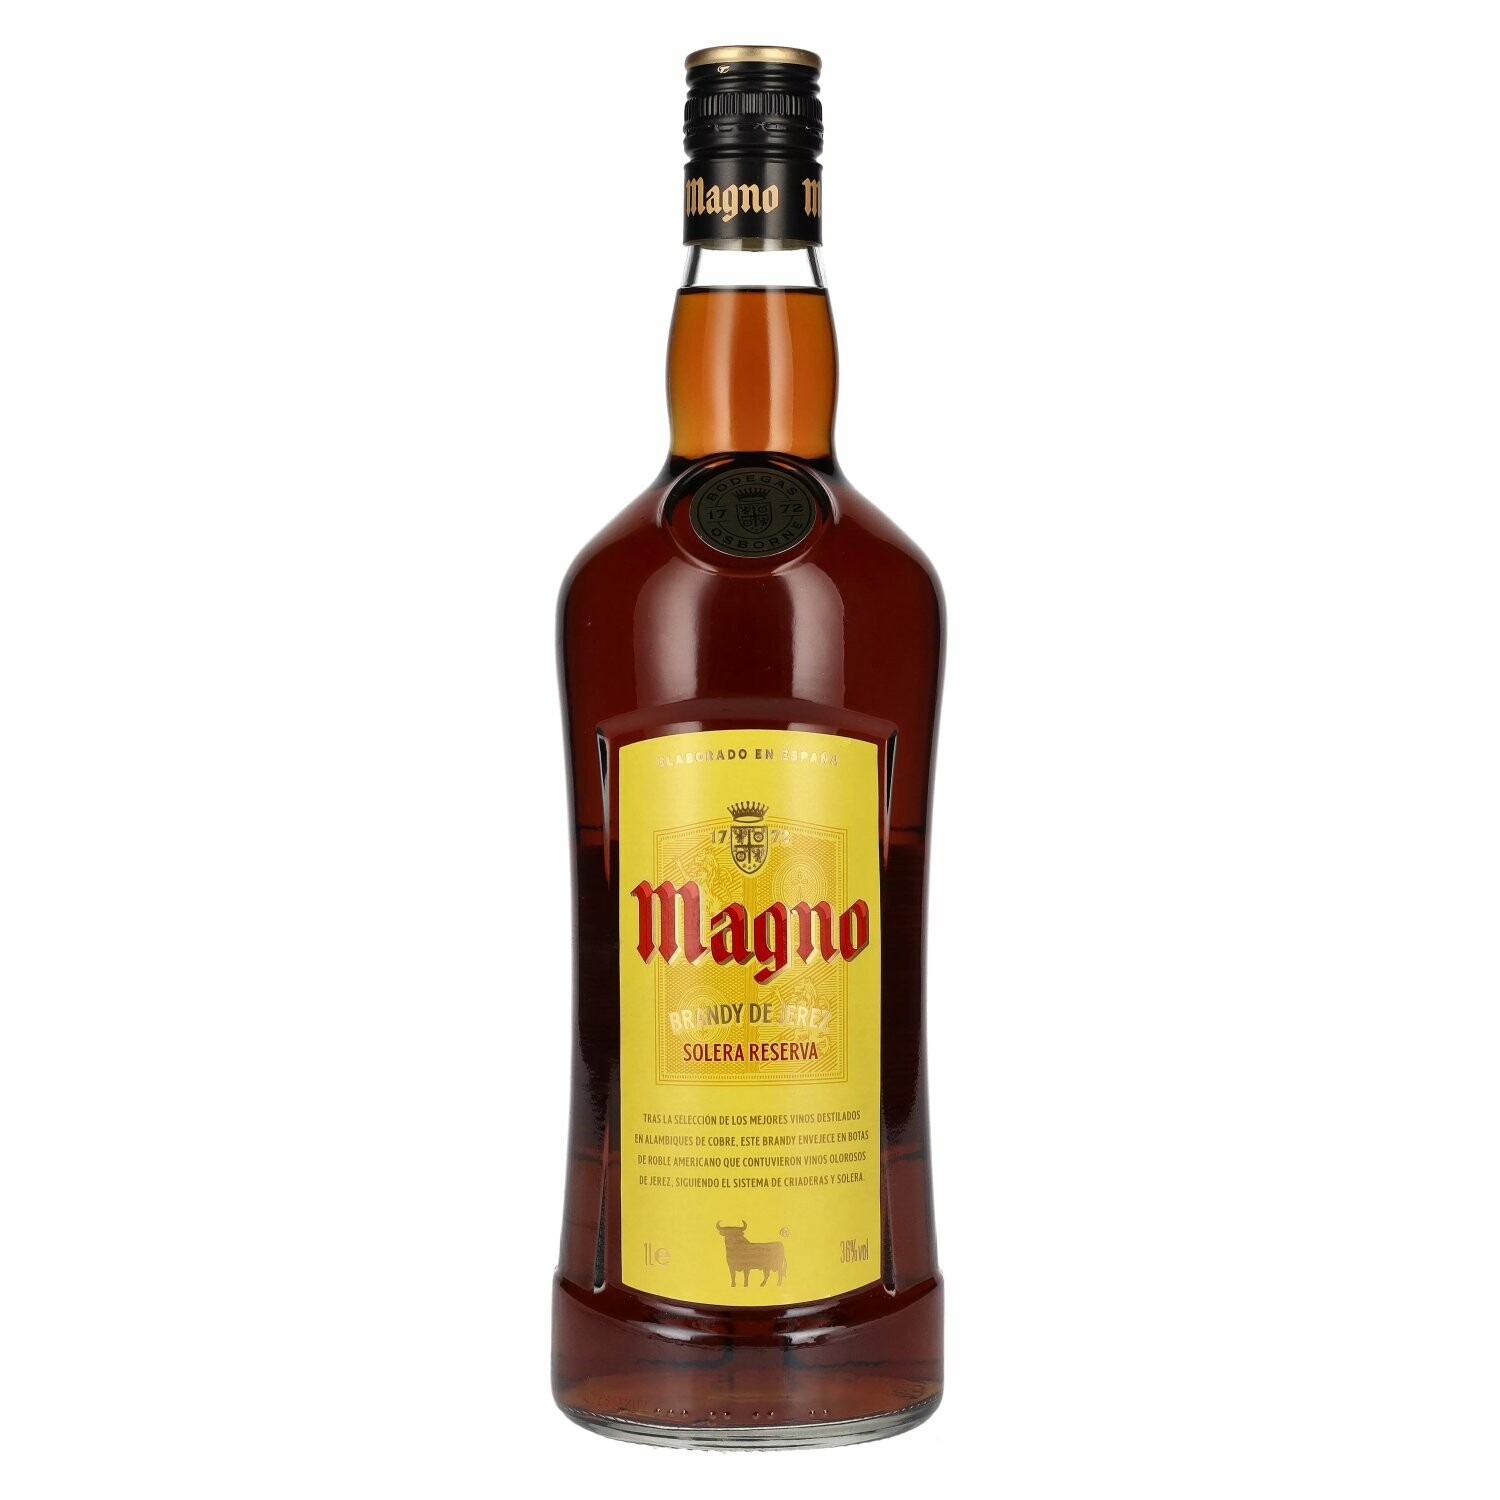 Osborne Magno Solera Reserva Brandy de Jerez 36% Vol. 1l